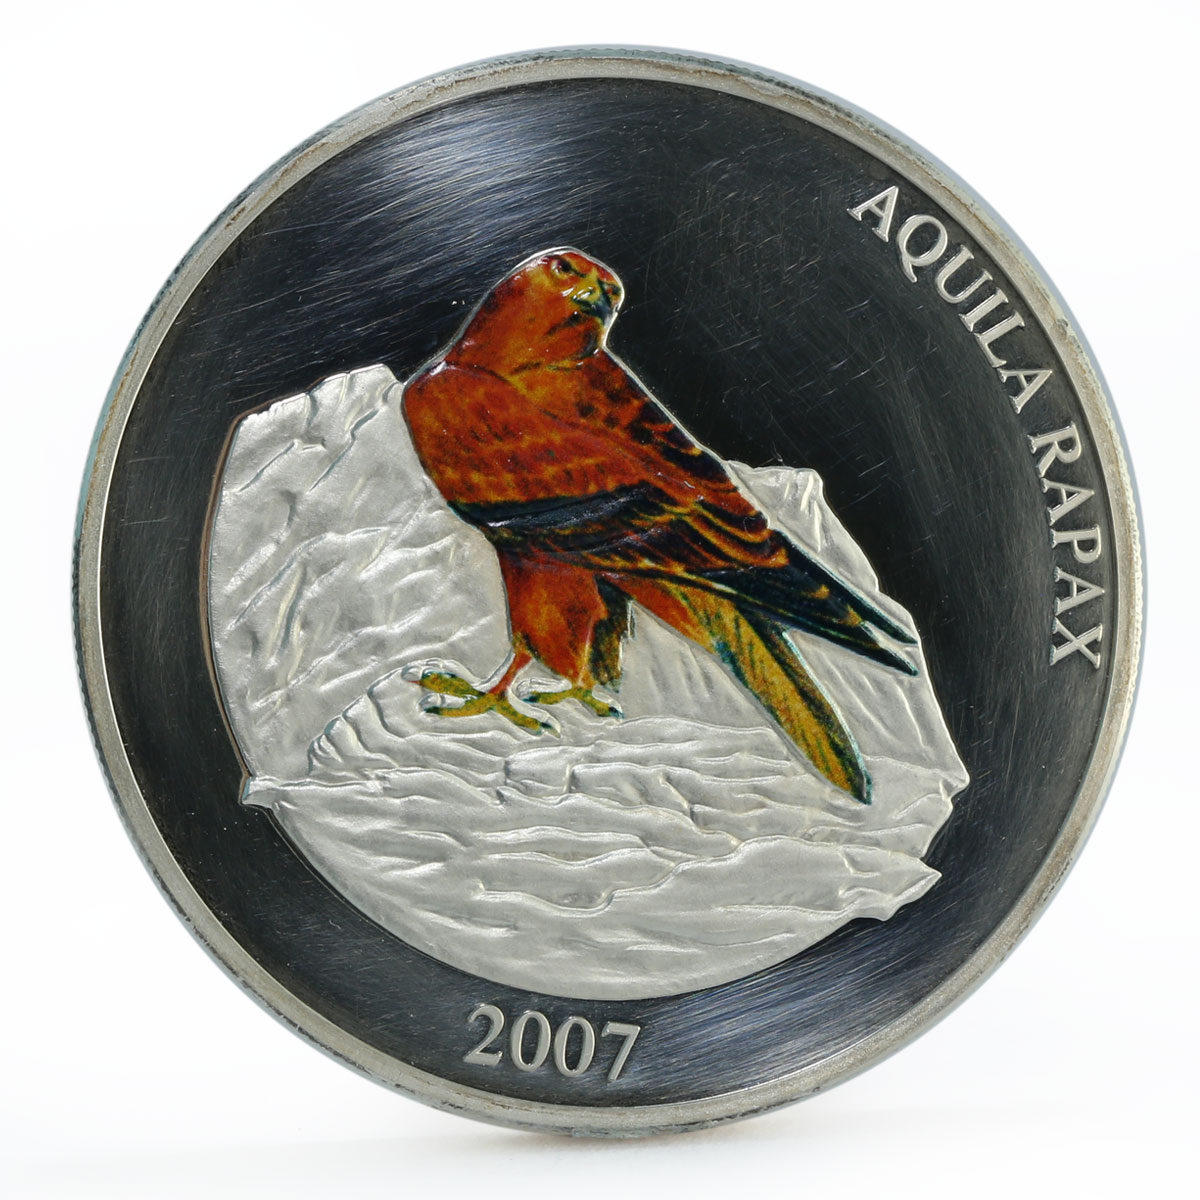 Mongolia 5000 togrog Aquila Rapax Steppe Eagle colored proof silver coin 2007